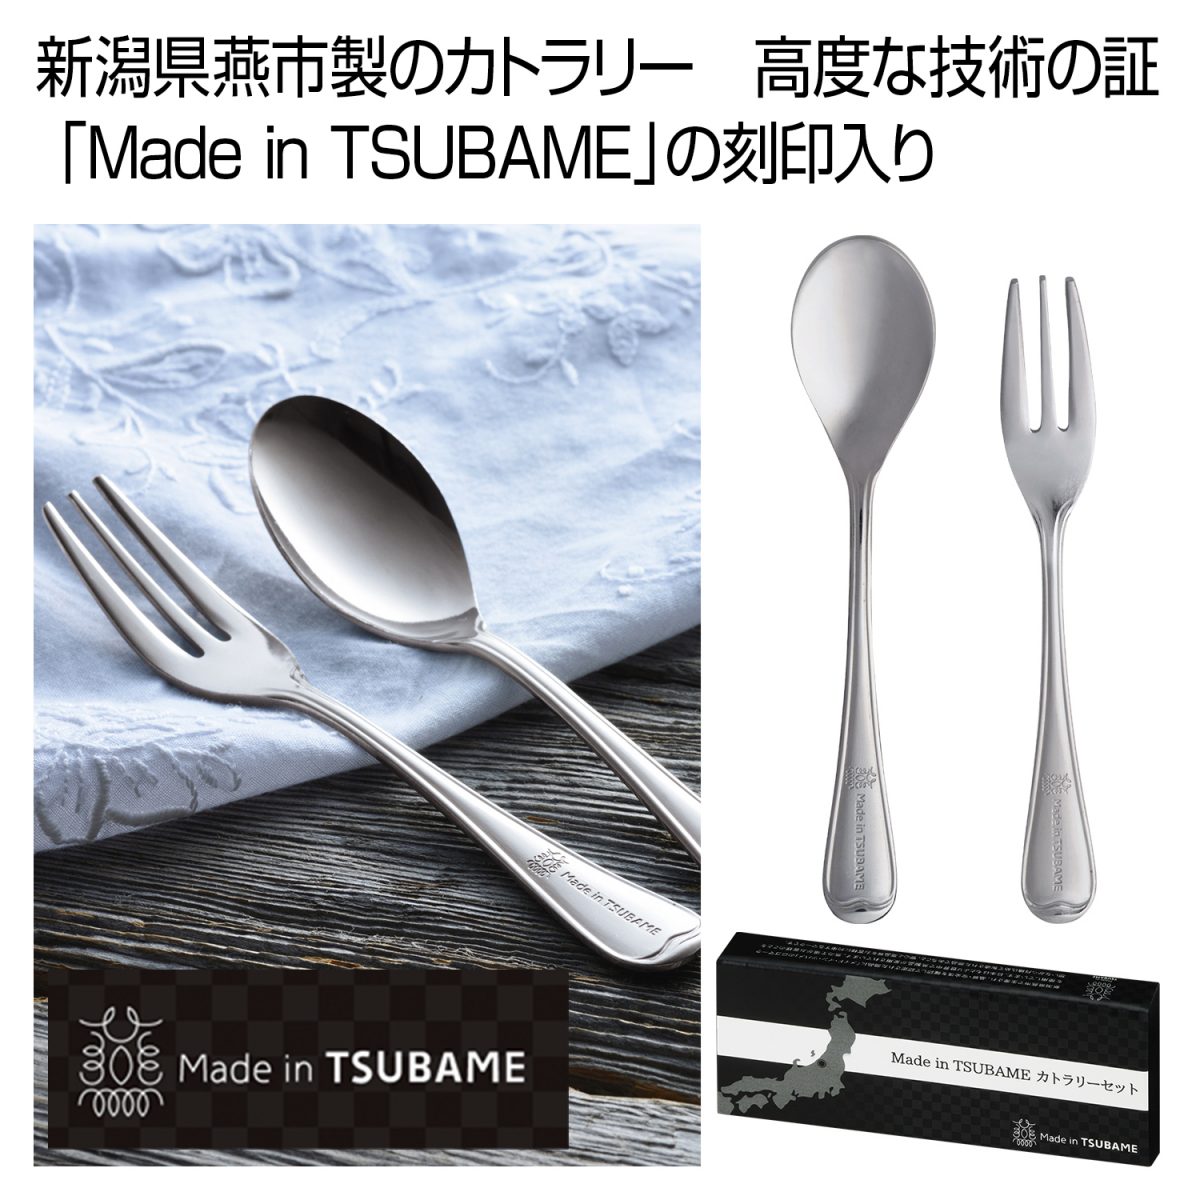 made in TSUBAME 新品未使用  ソーダパフェ かき混ぜスプーン